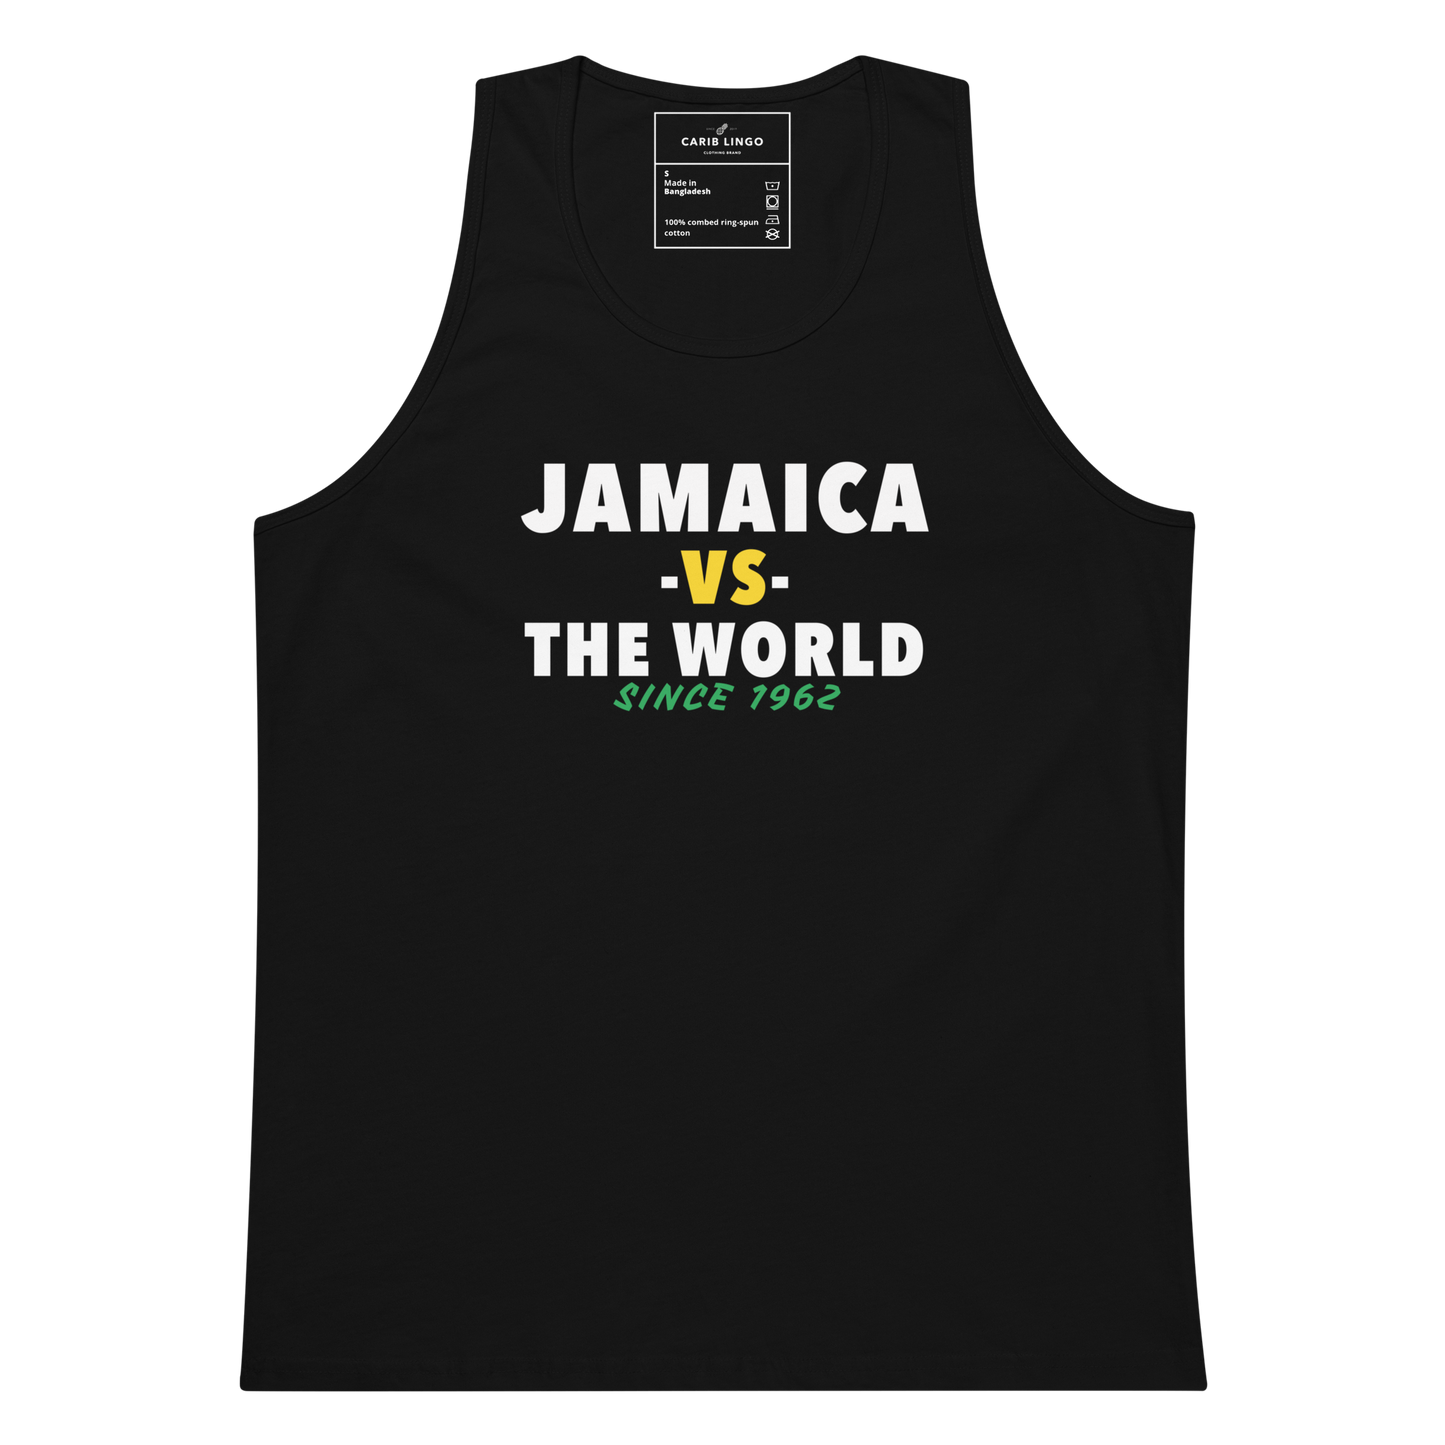 Jamaica -vs- The World Men’s premium tank top